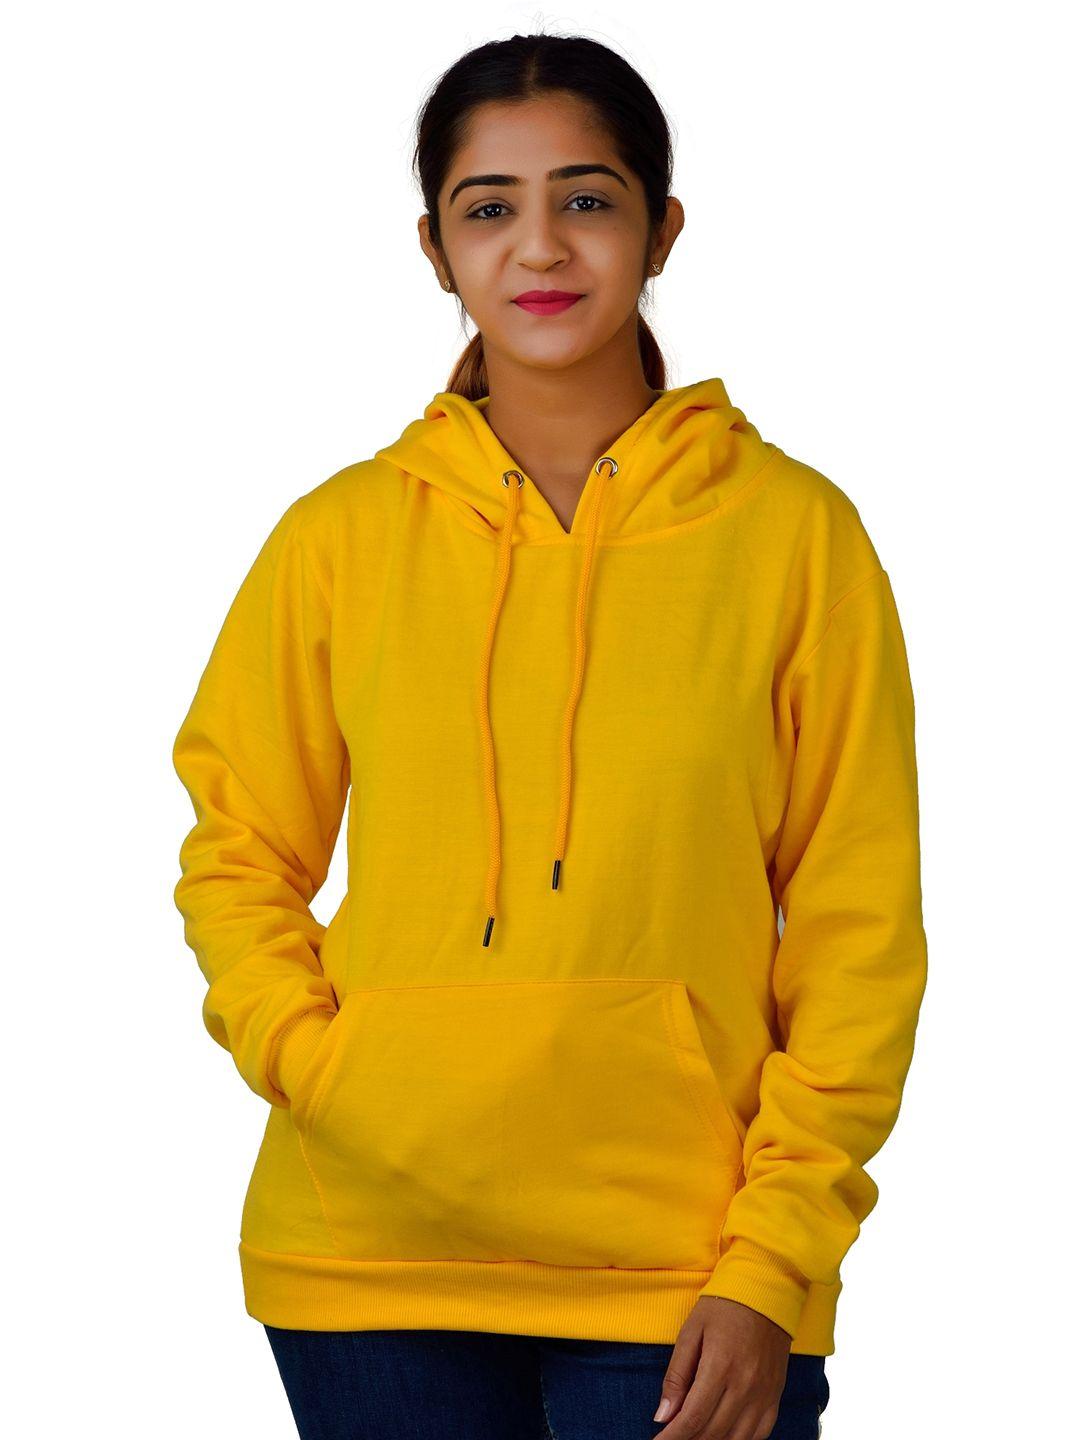 divra clothing unisex long sleeves fleece hooded pullover sweatshirt